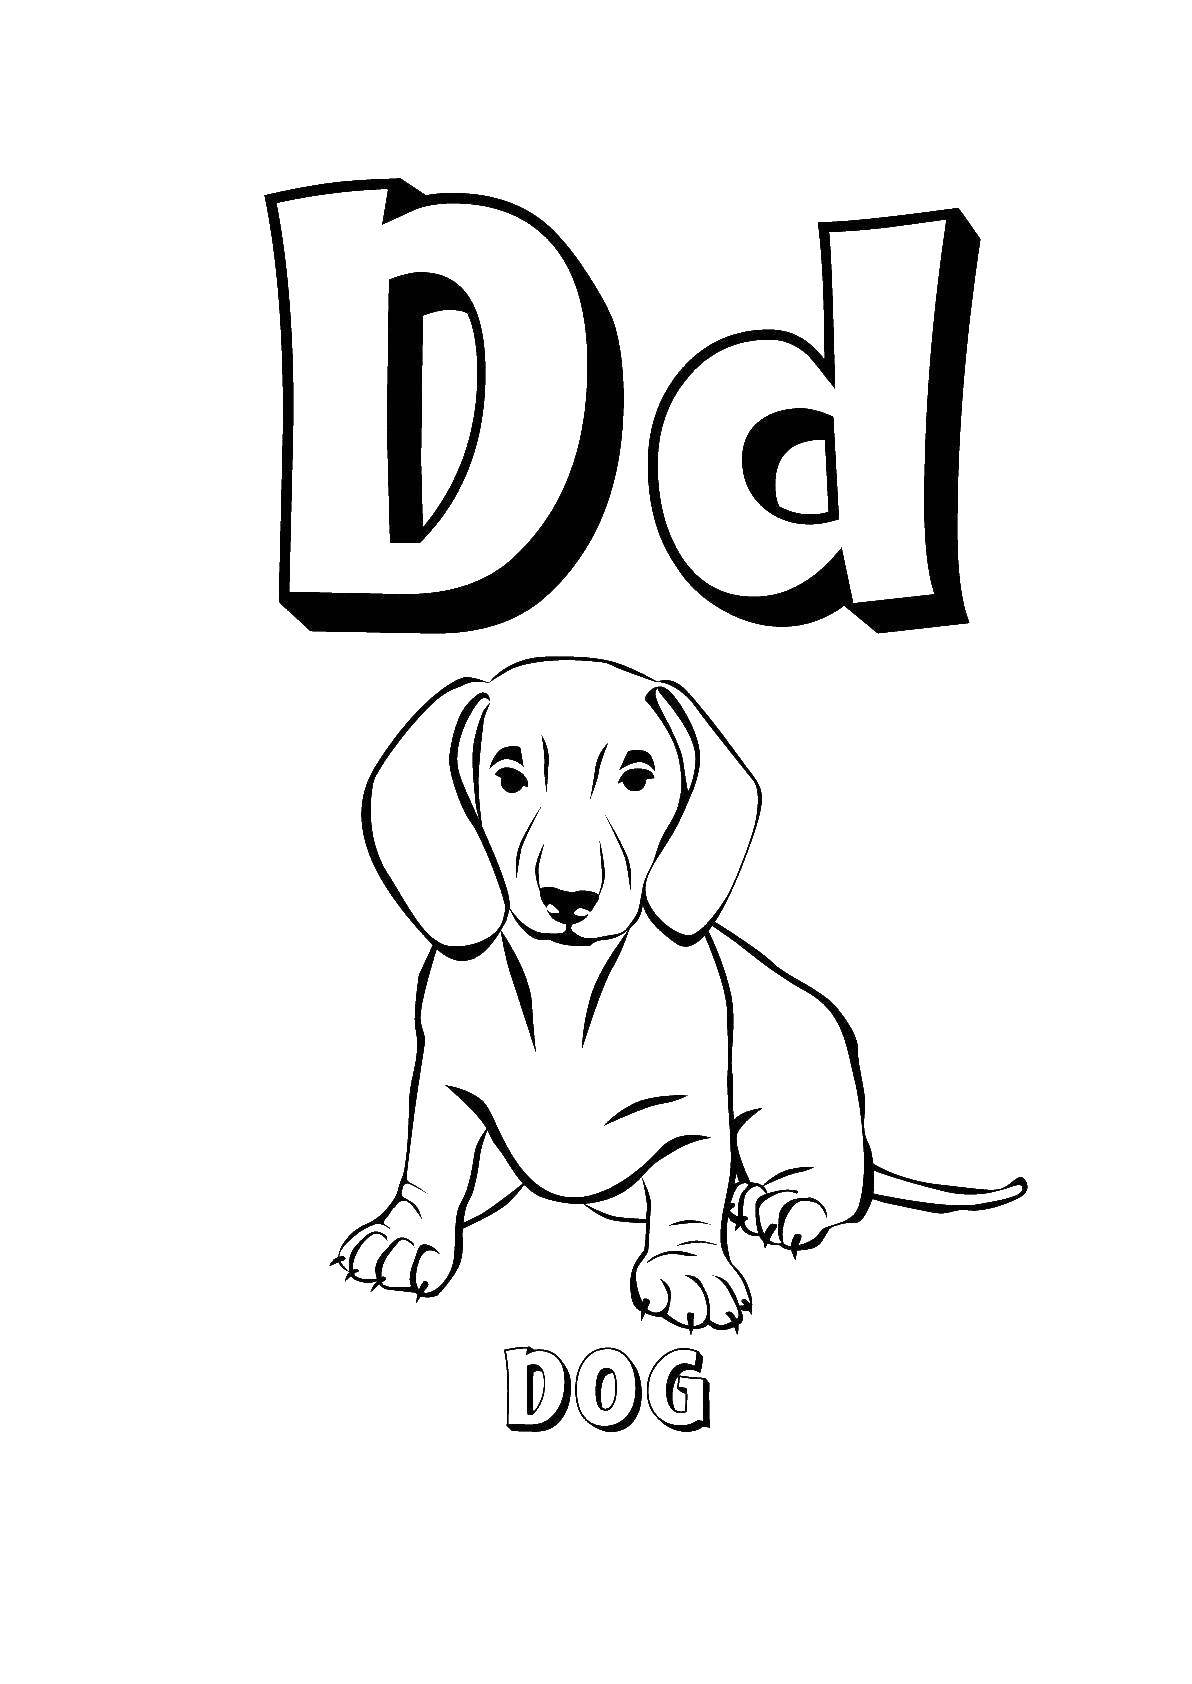 Coloring English alphabet dog. Category English. Tags:  The English alphabet, a dog.